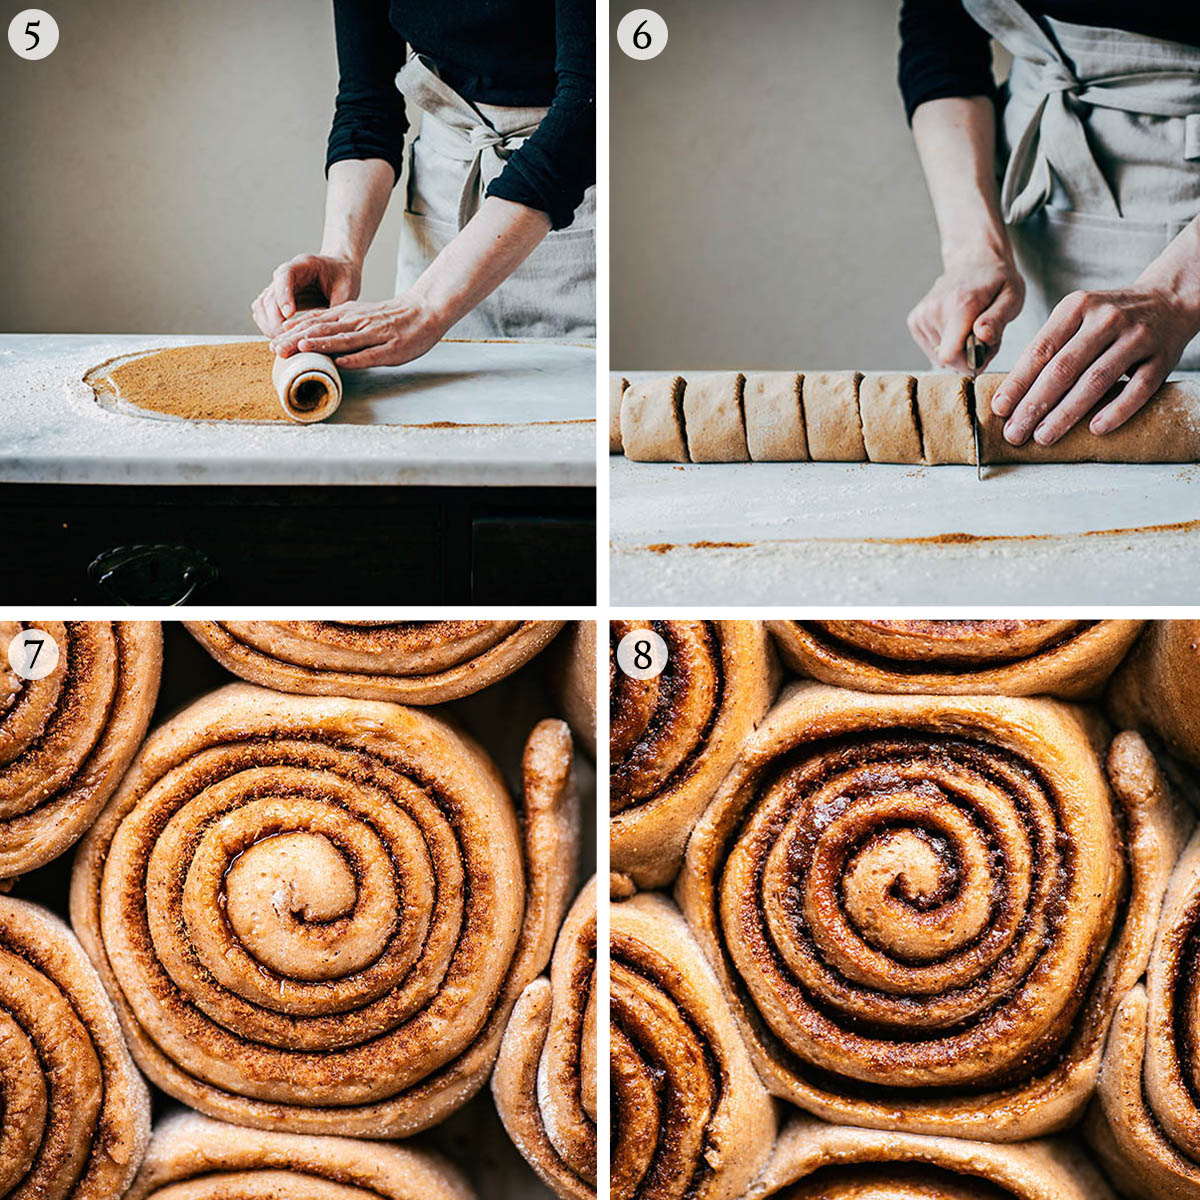 Cinnamon rolls steps 5 to 8.